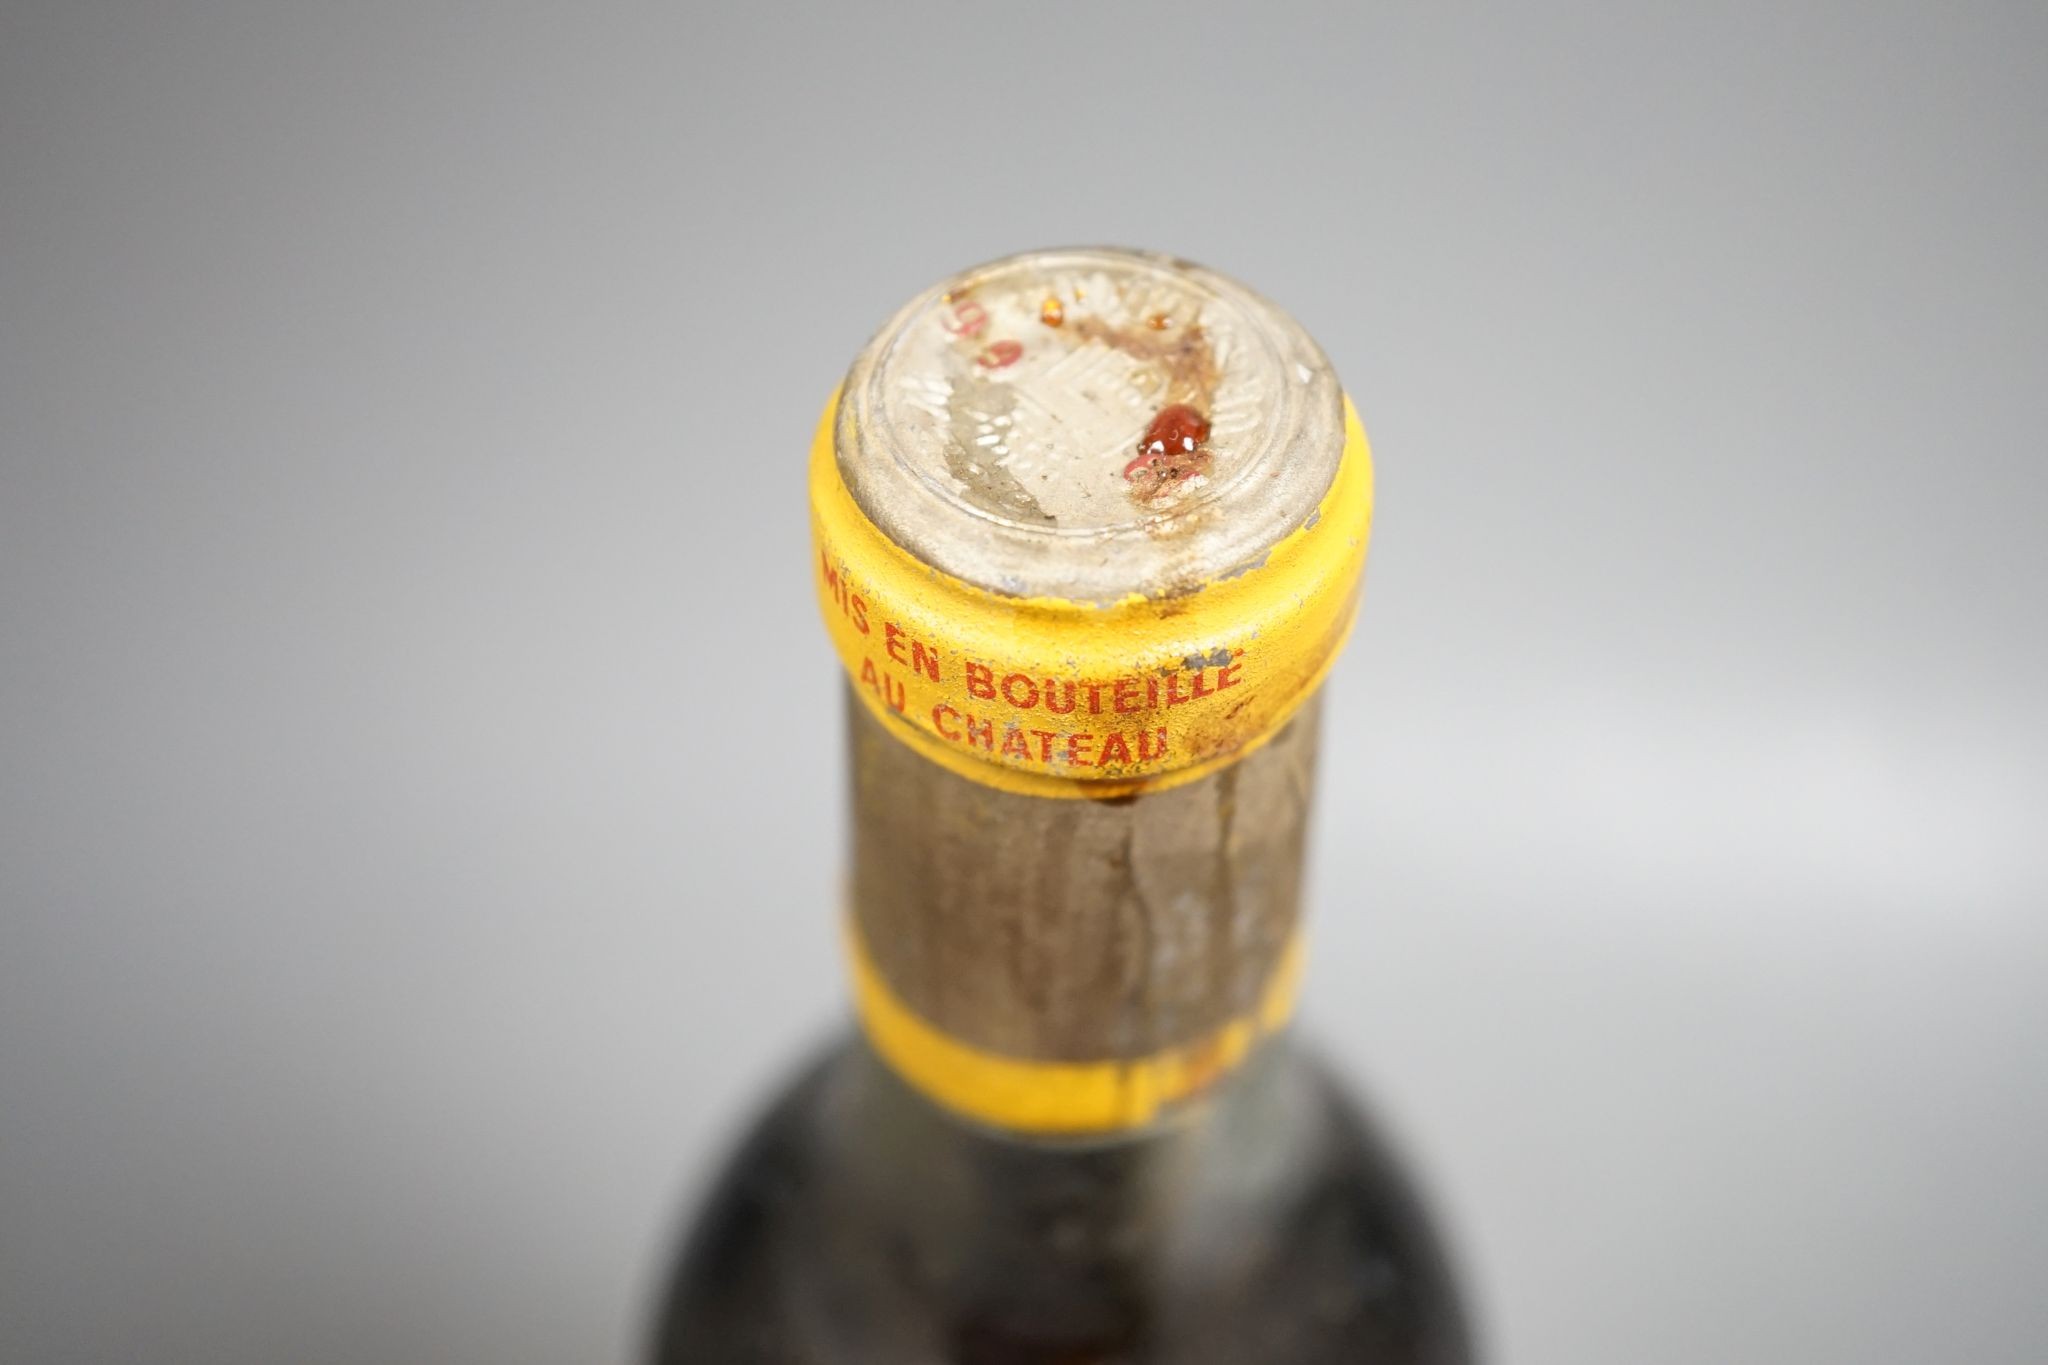 A bottle of Chateau d’Yquem, 1966